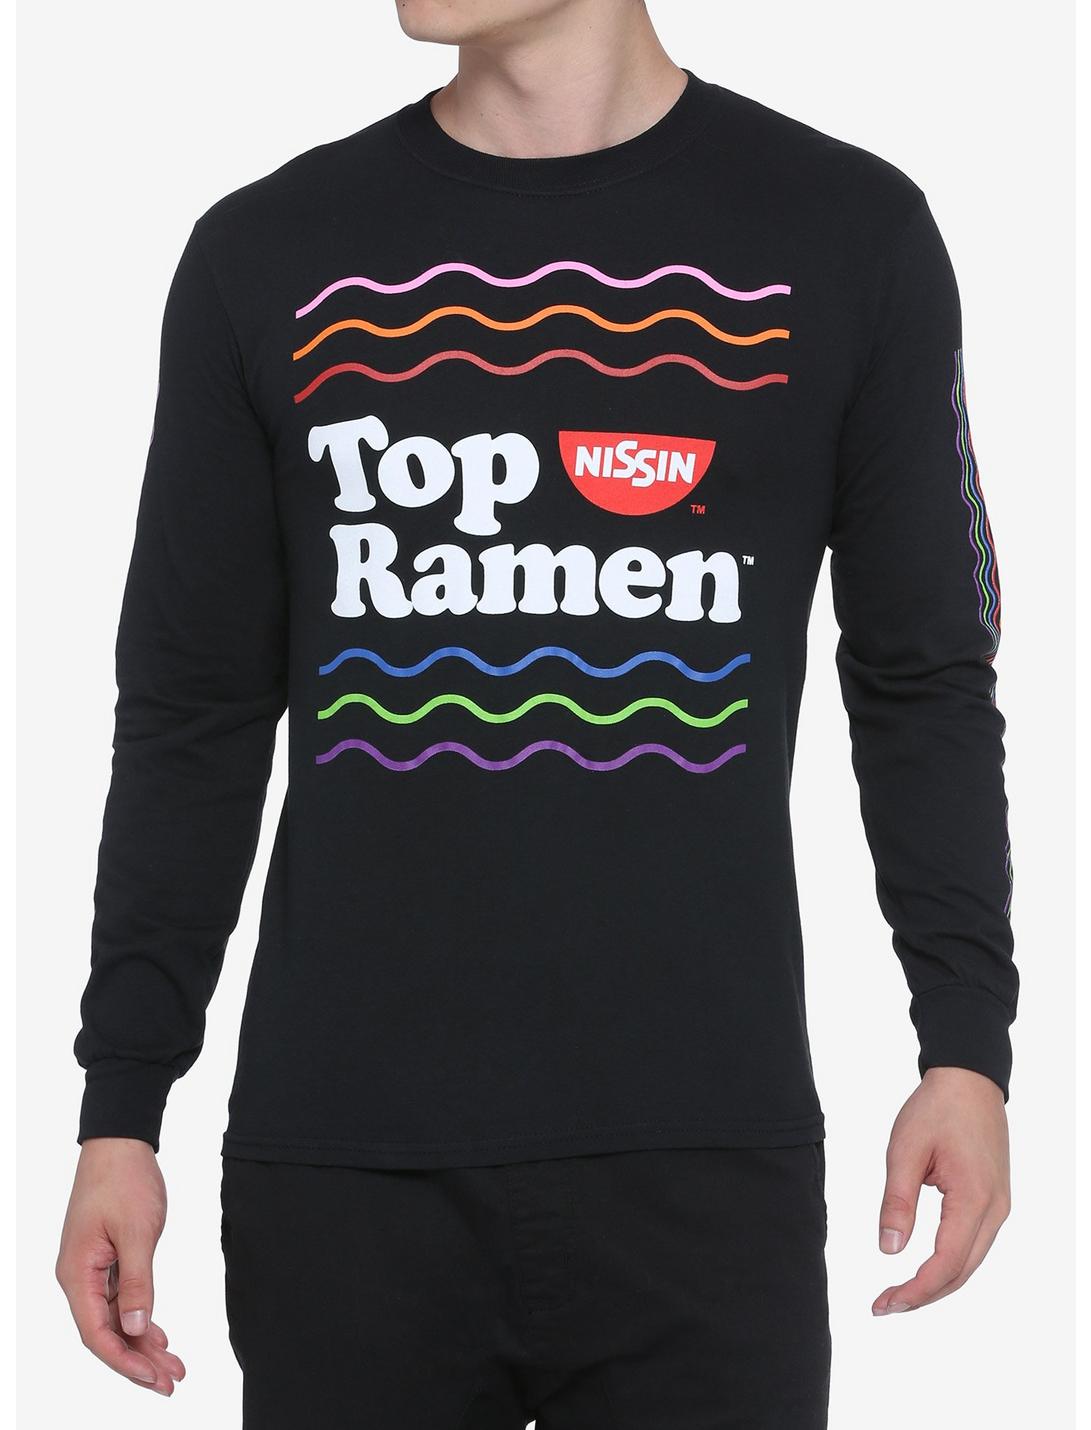 Nissin Top Ramen Squiggles Long-Sleeve T-Shirt, MULTI, hi-res